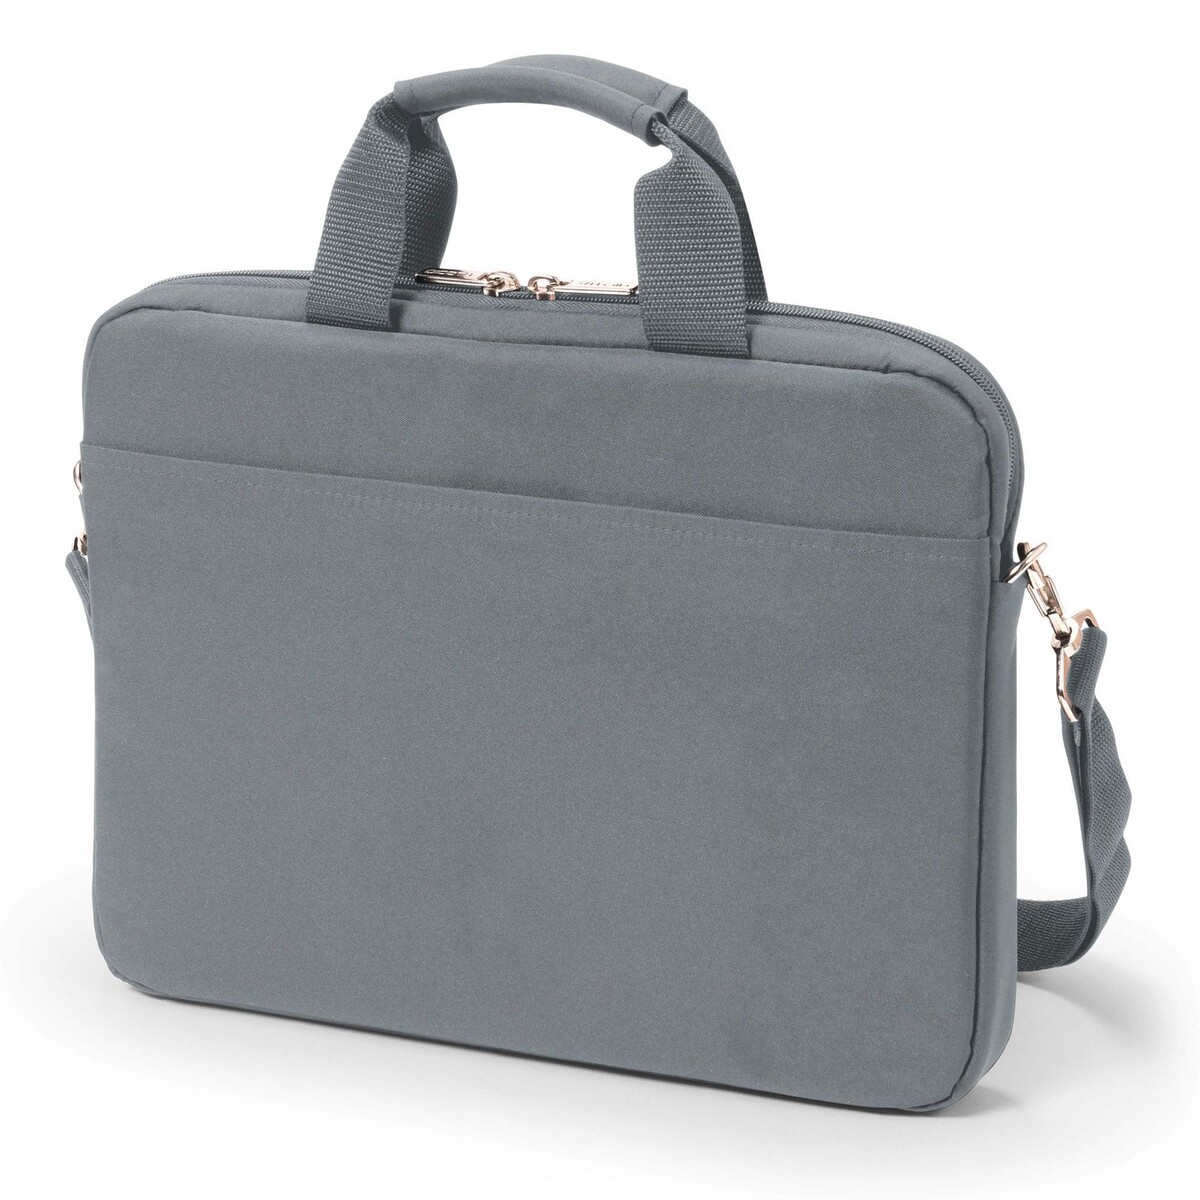 Dicota Laptop Bag, Eco Slim Base, 14.1 inches, Grey, D31305